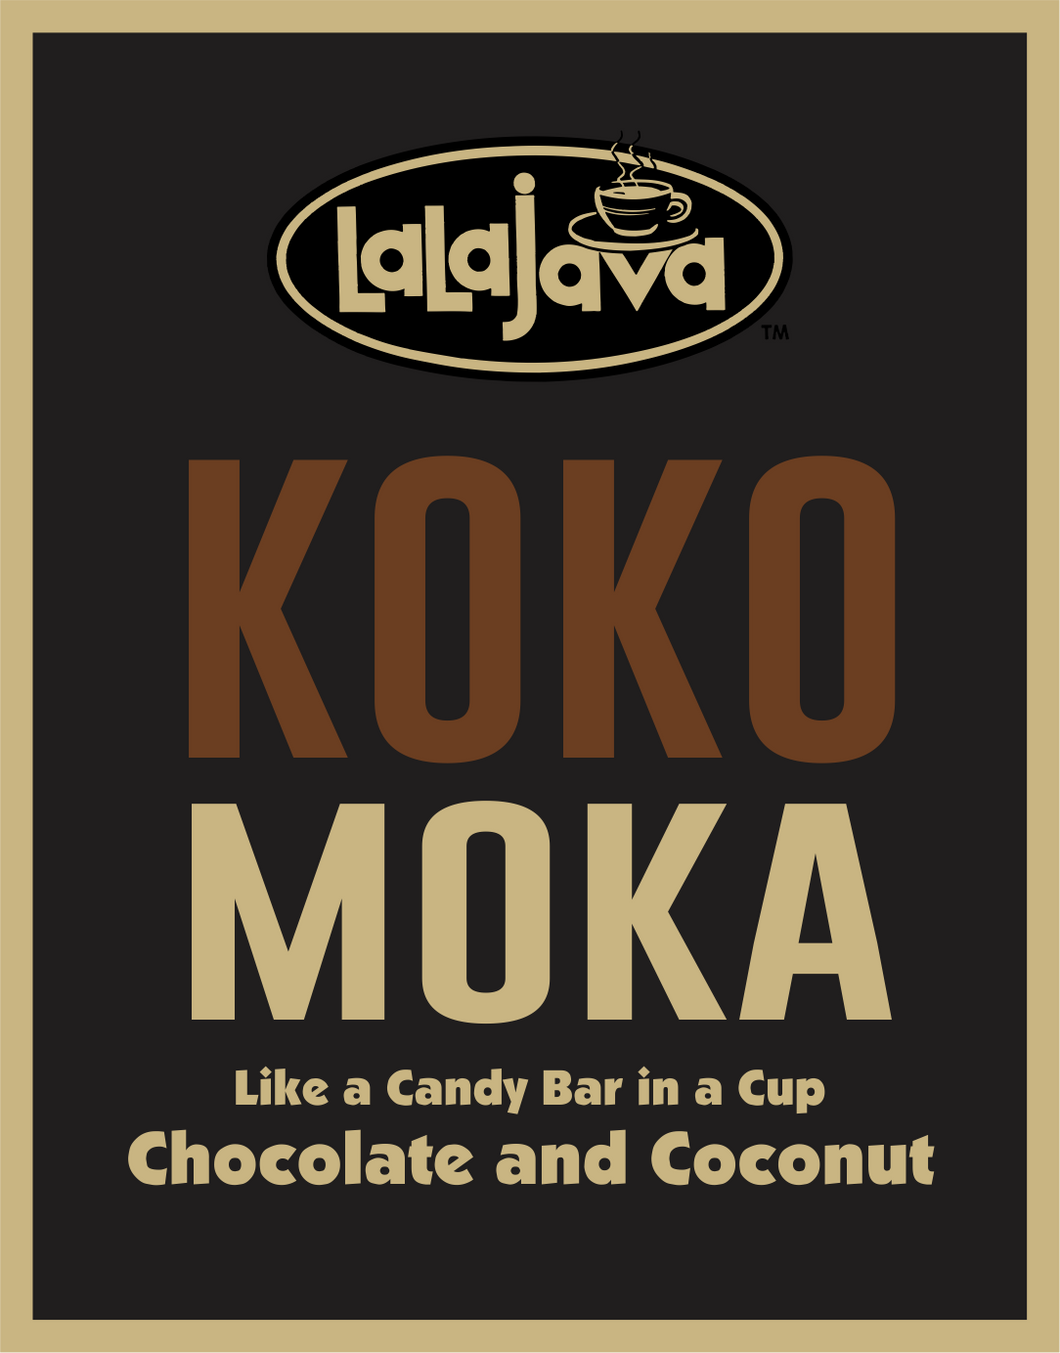 Coffee Koko Moka